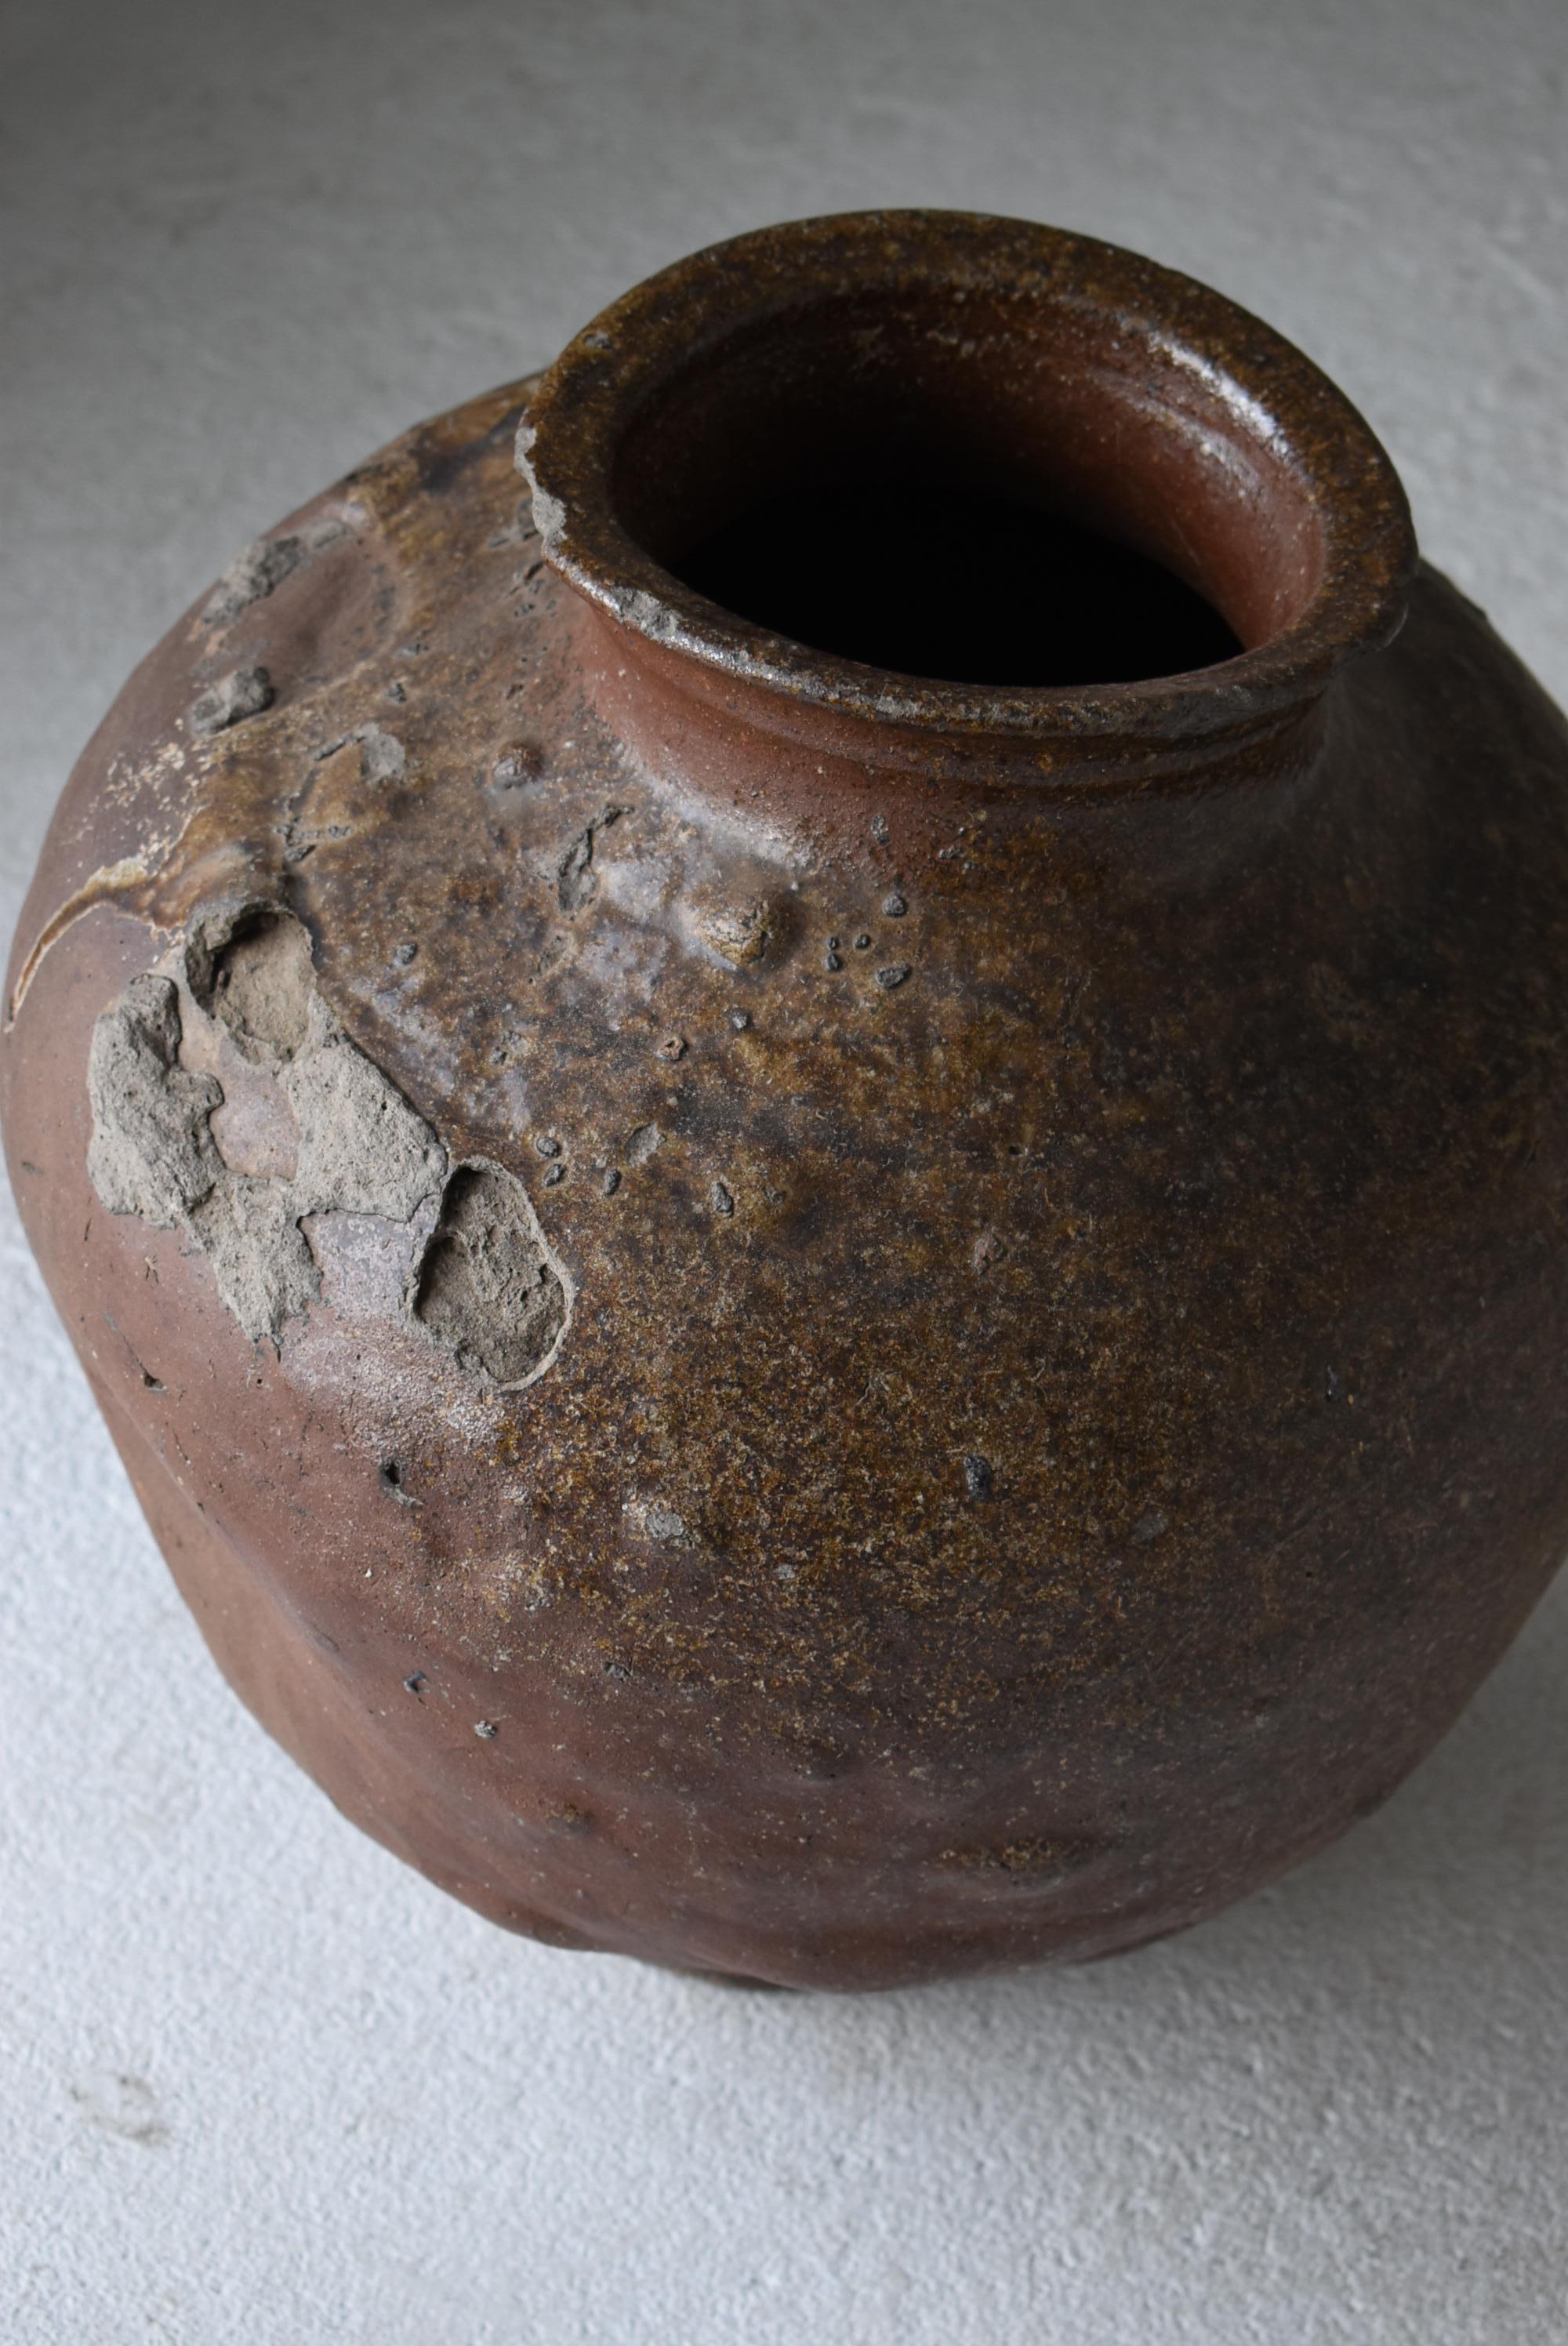 1700s-1850s Japanese antique TSUBO Tokoname / wabisabi-art ceramic jar vase

Size: 470 F, H 510
Edo period.